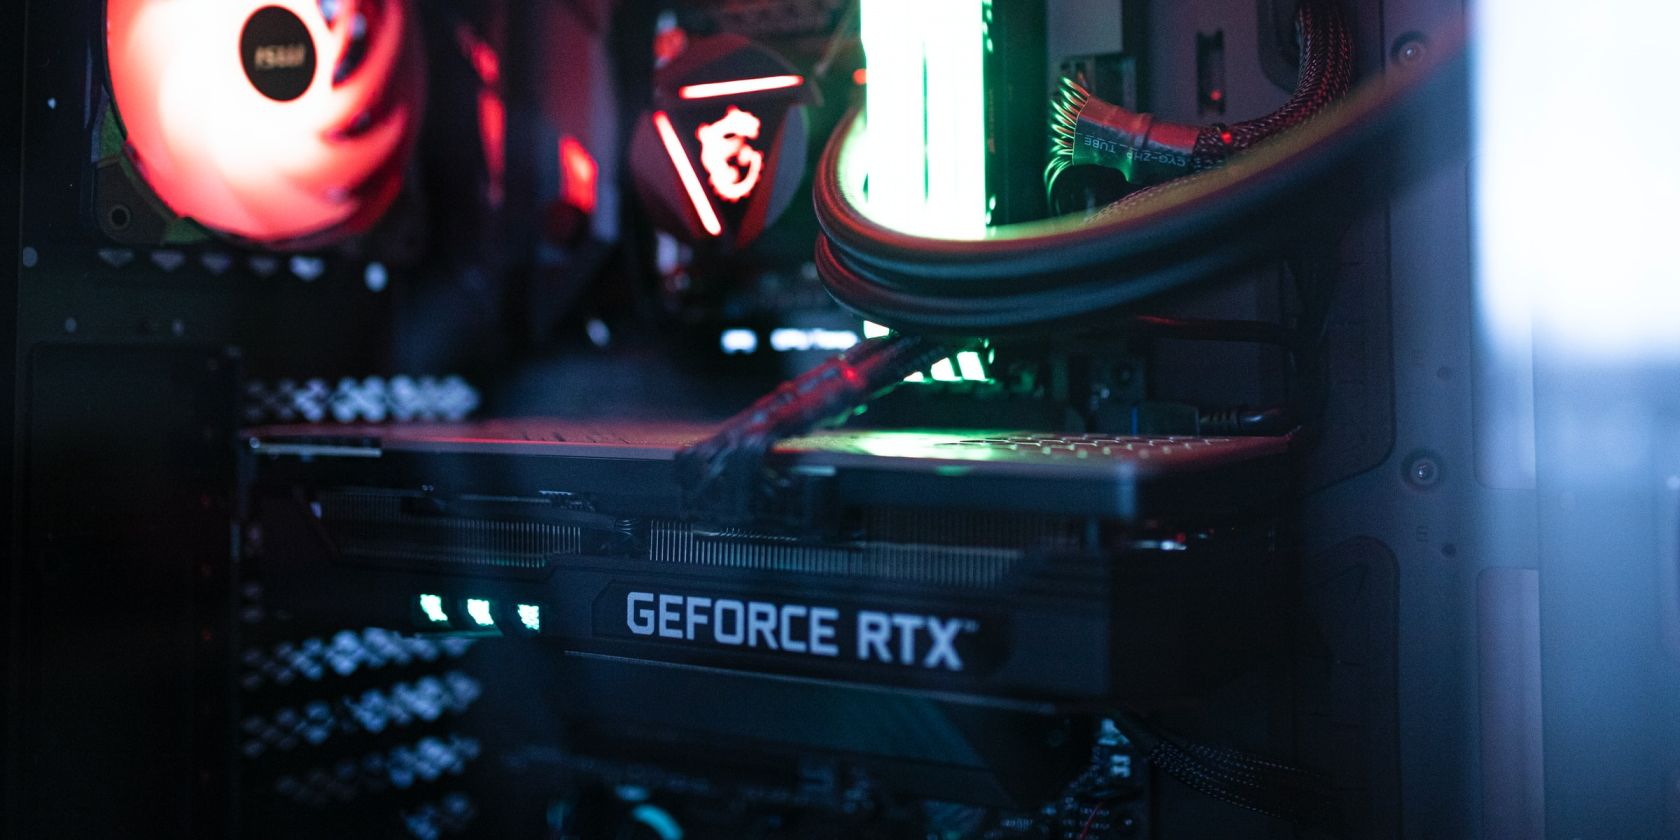 GeForce RTX GPU inside a PC